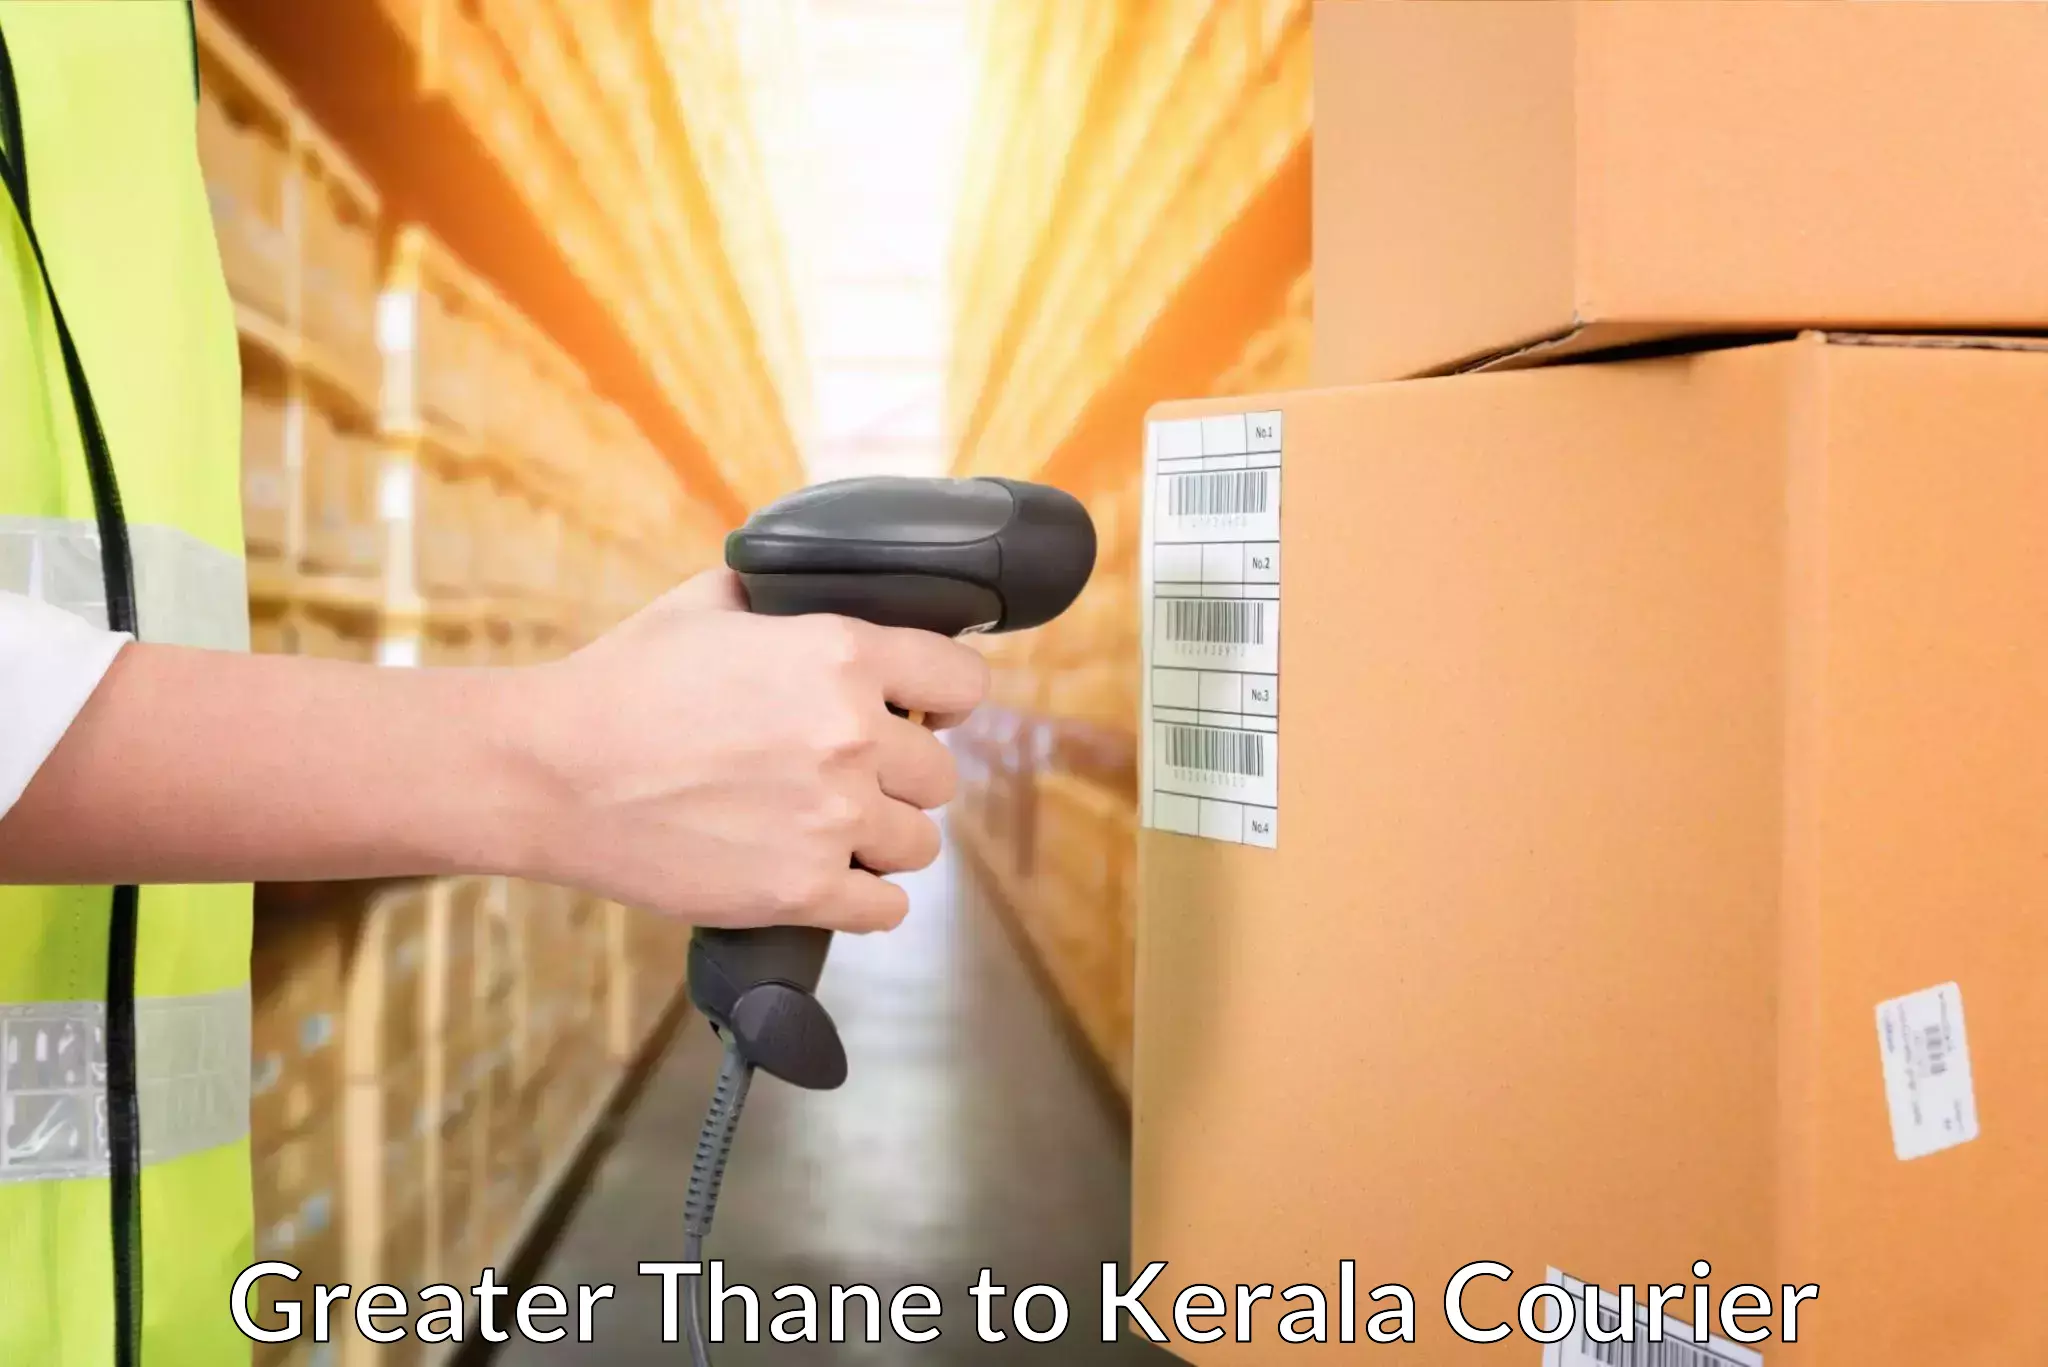 Logistics service provider Greater Thane to Kerala